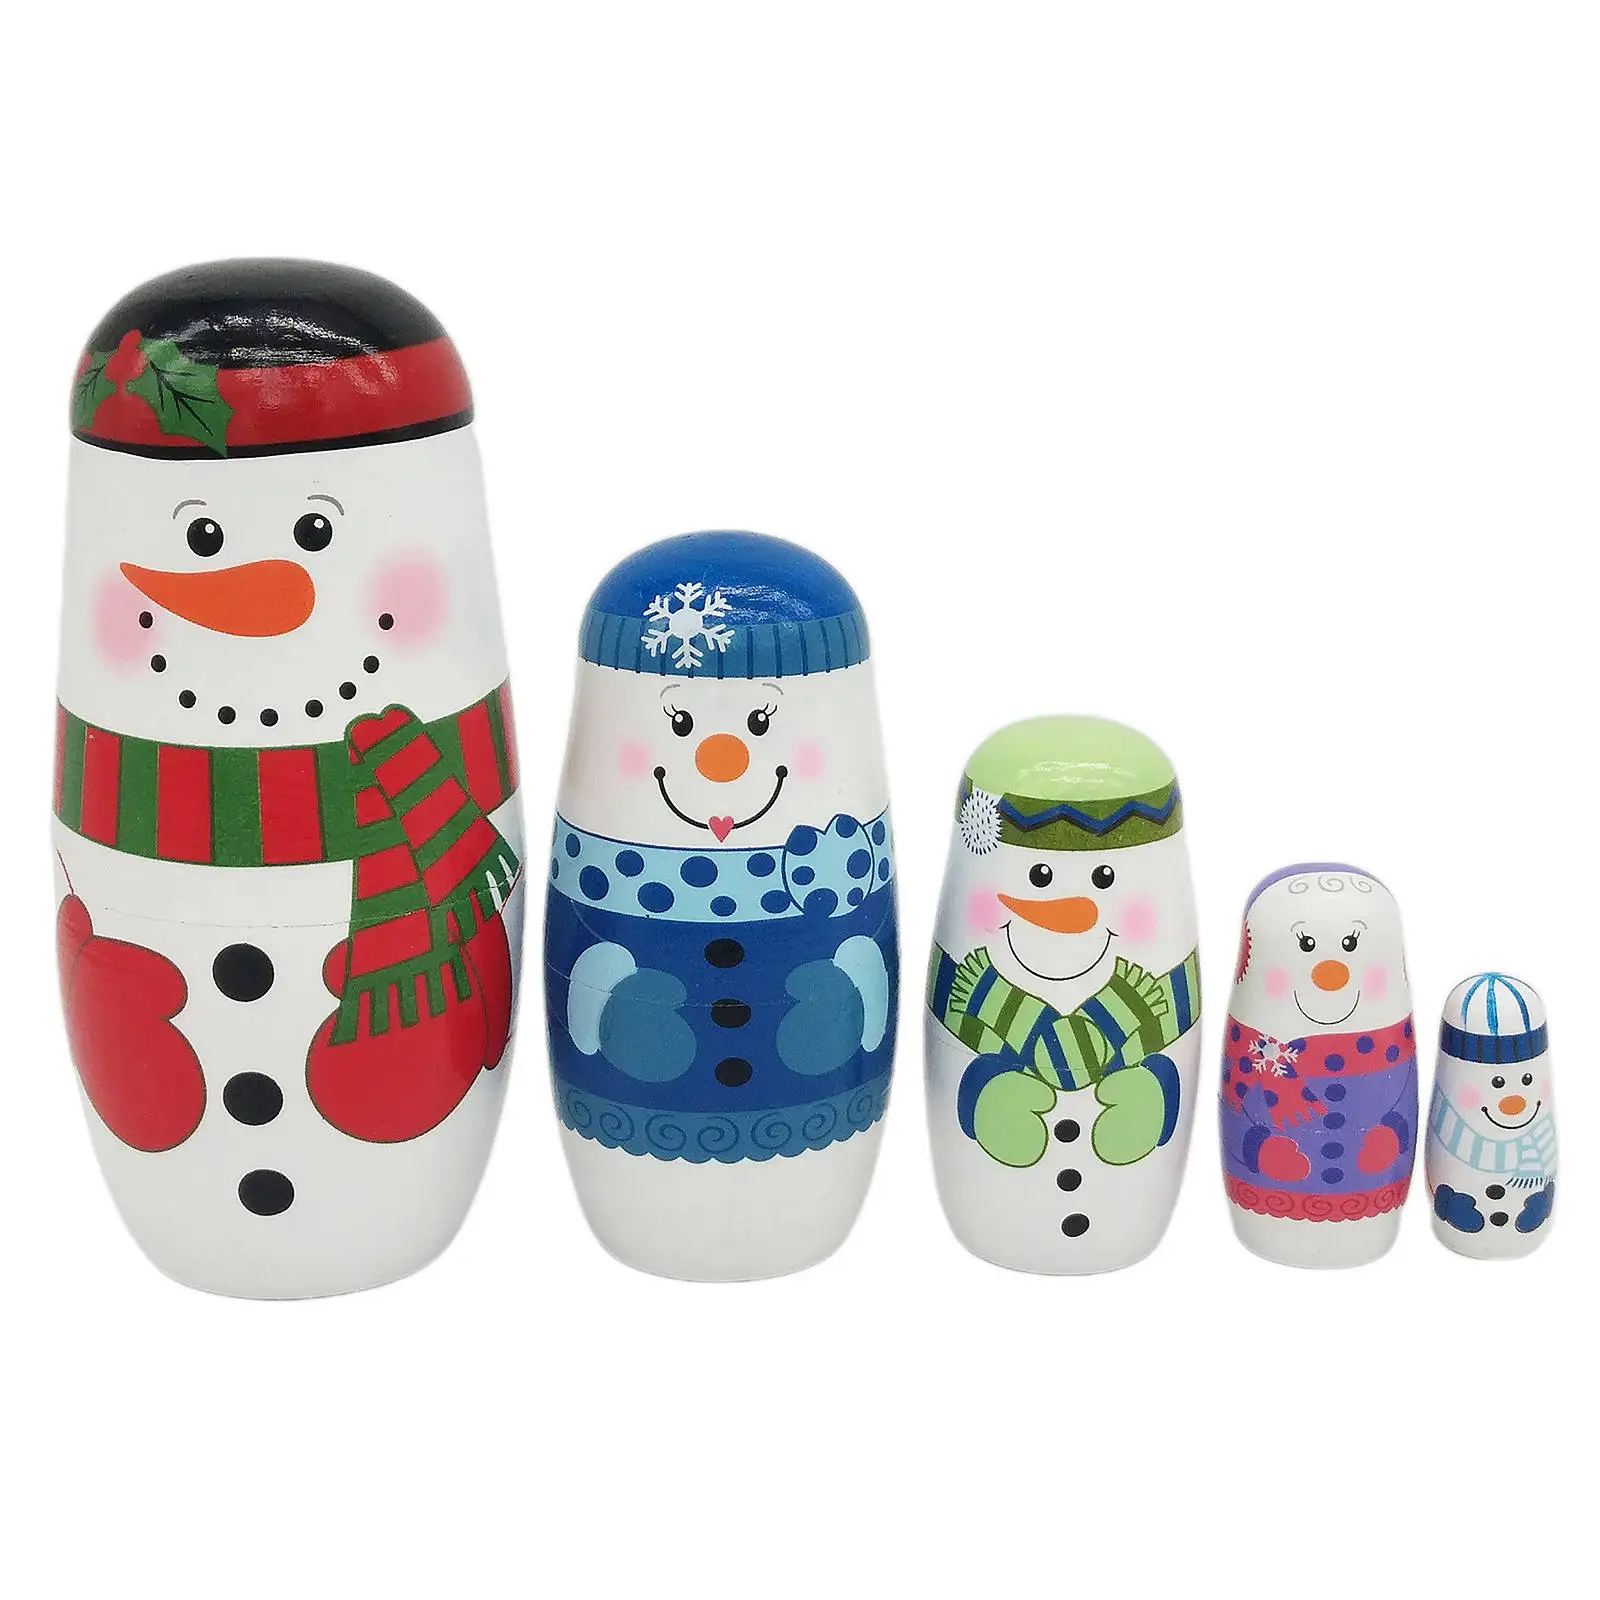 5Pcs Set Snowman Wooden Stacking Toys, Matryoshka Russian Nesting Dolls for